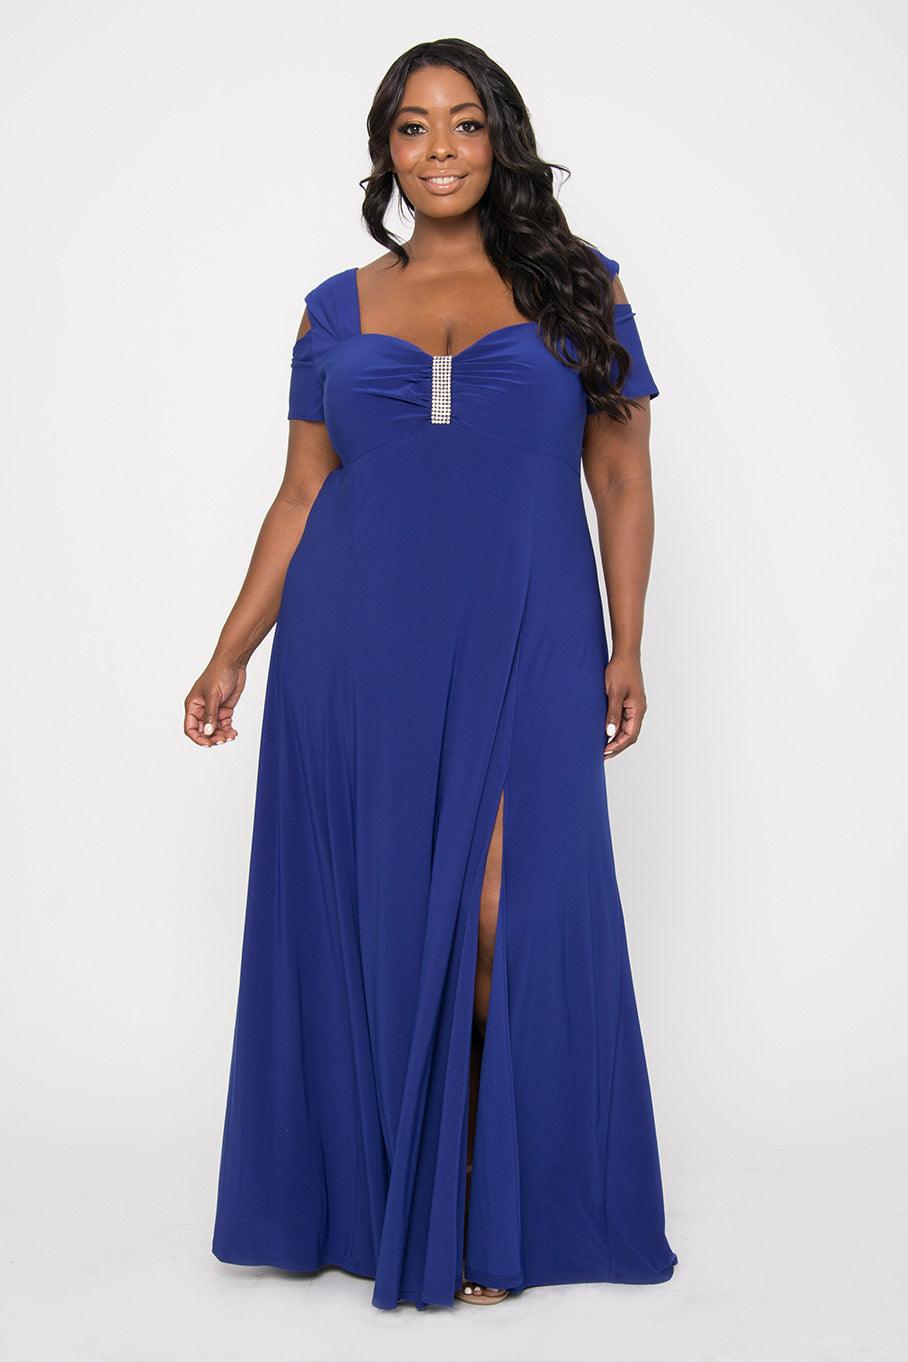 R&M Richards 1367W Long Plus Size Formal Evening Dress for $39.99